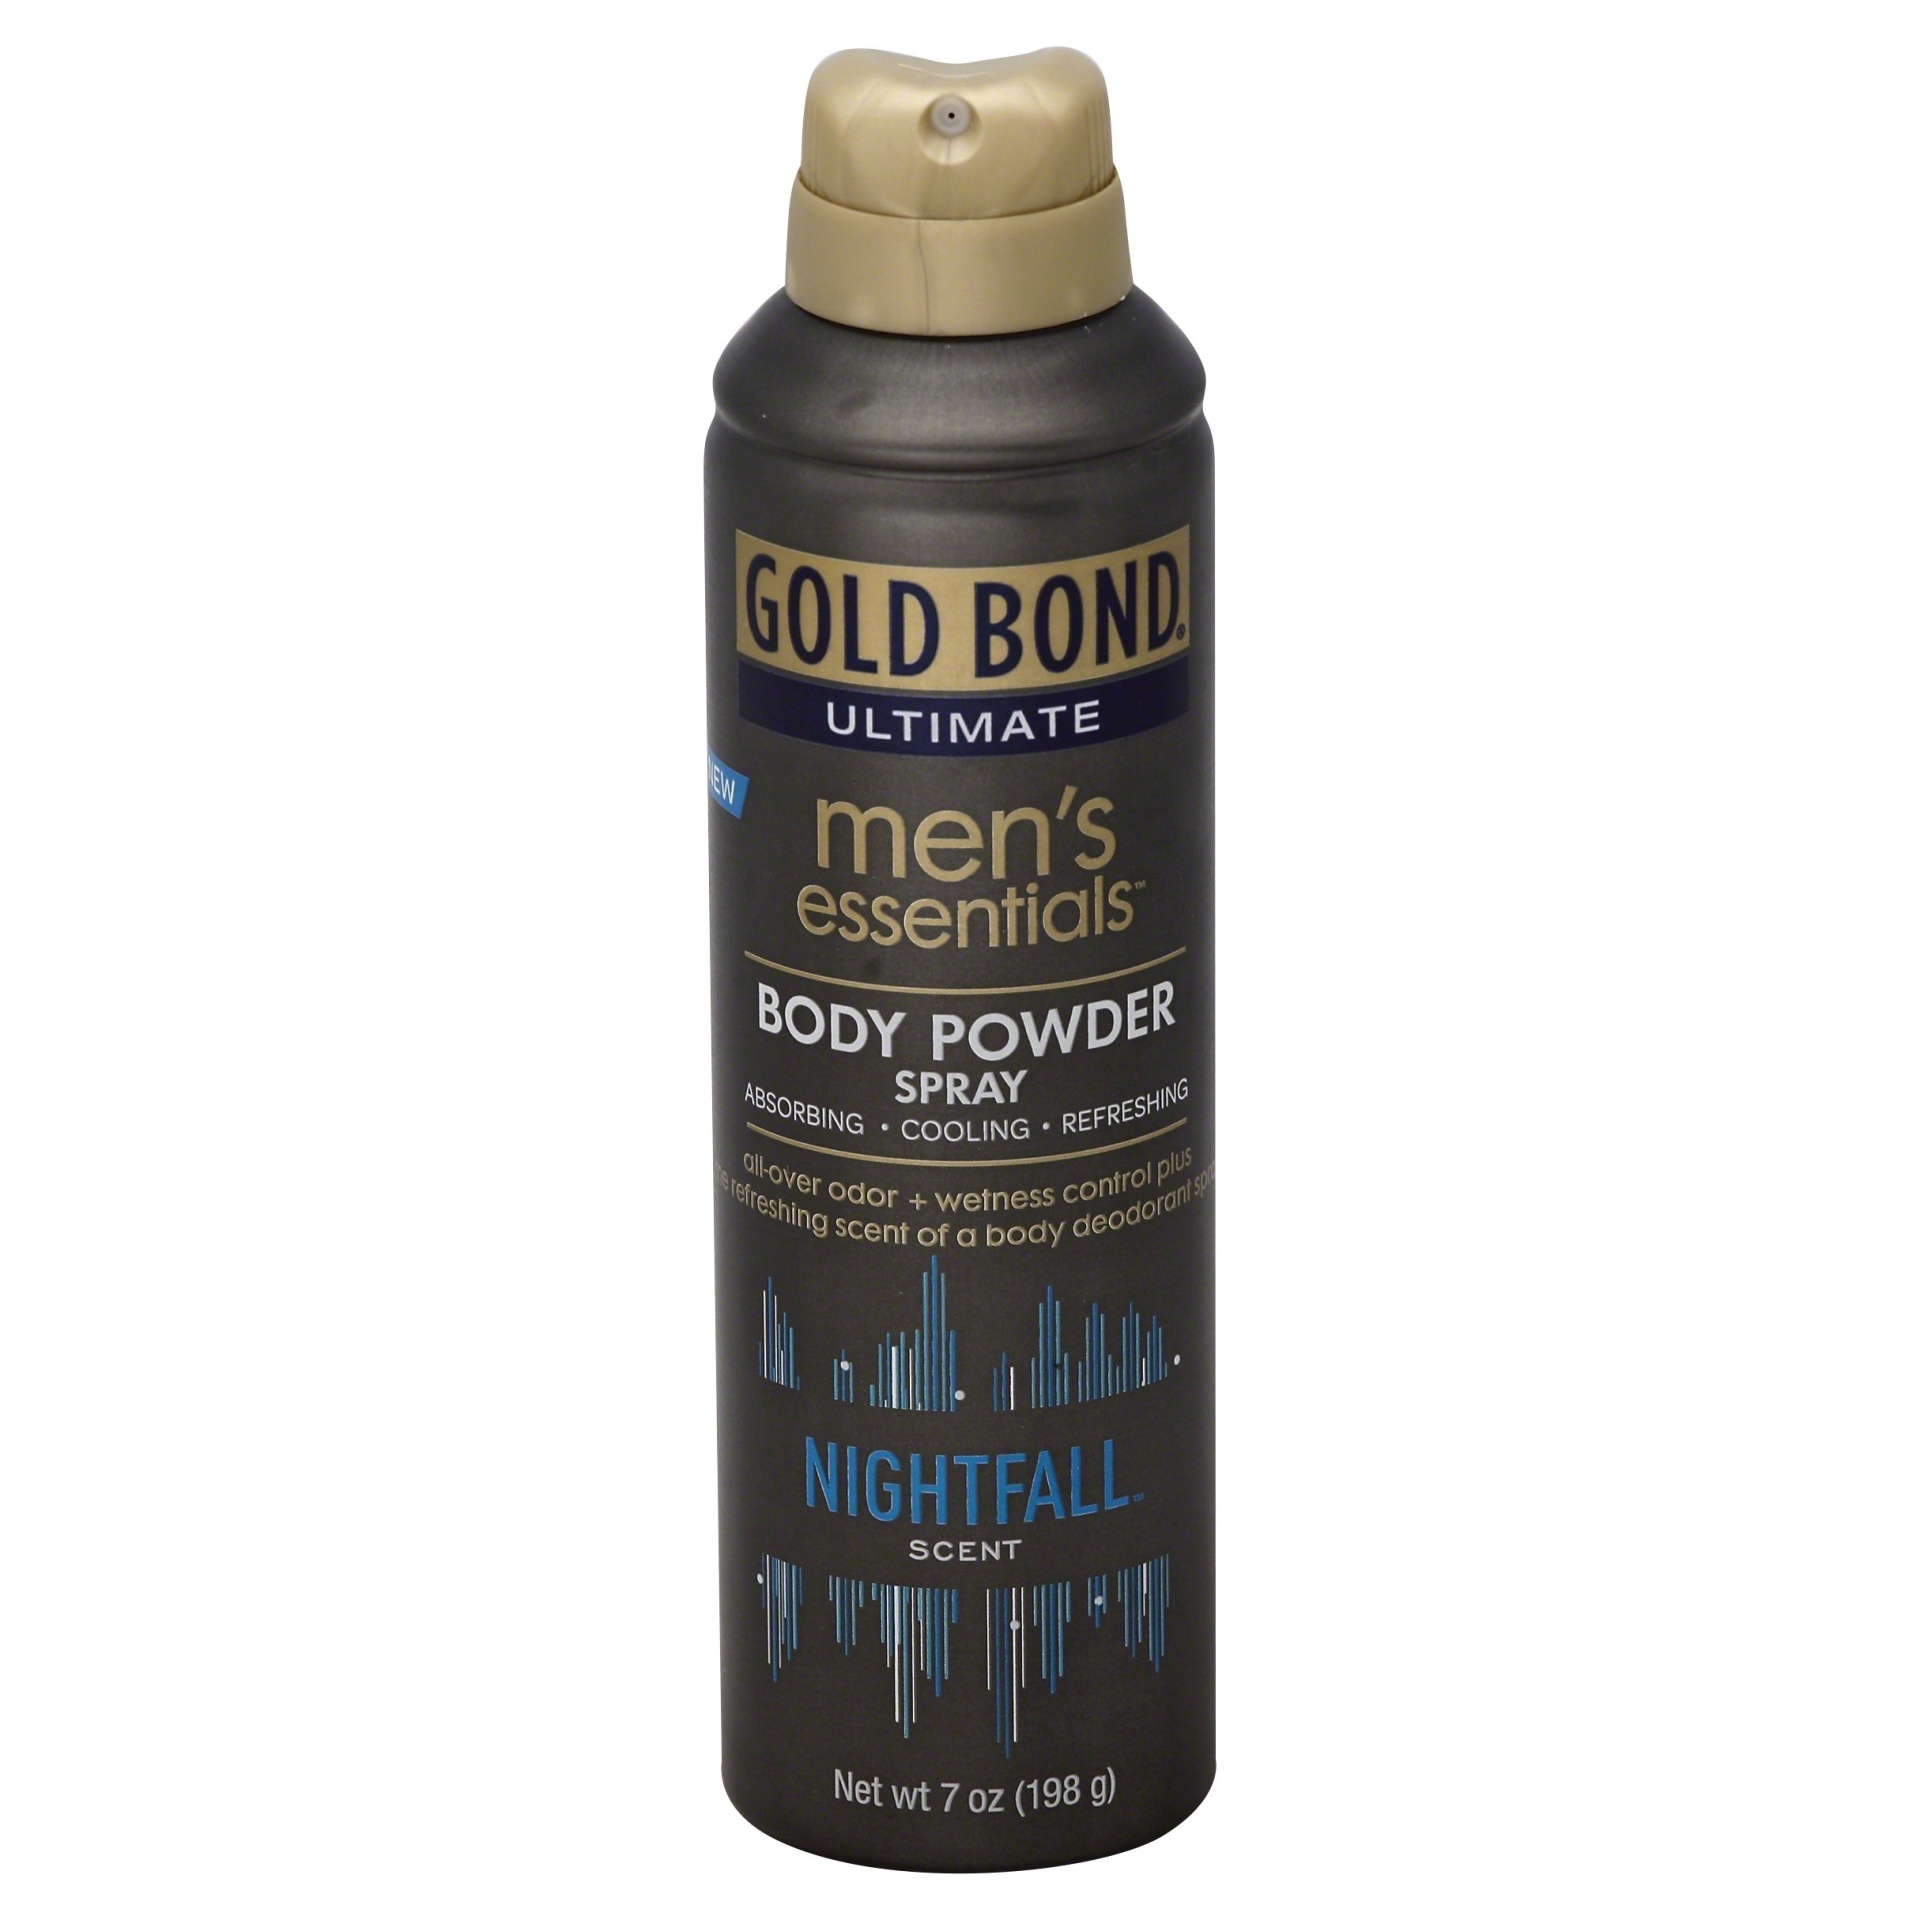 slide 1 of 2, Gold Bond Ultimate Men's Essentials Body Powder Spray Nightfall Scent, 7 oz